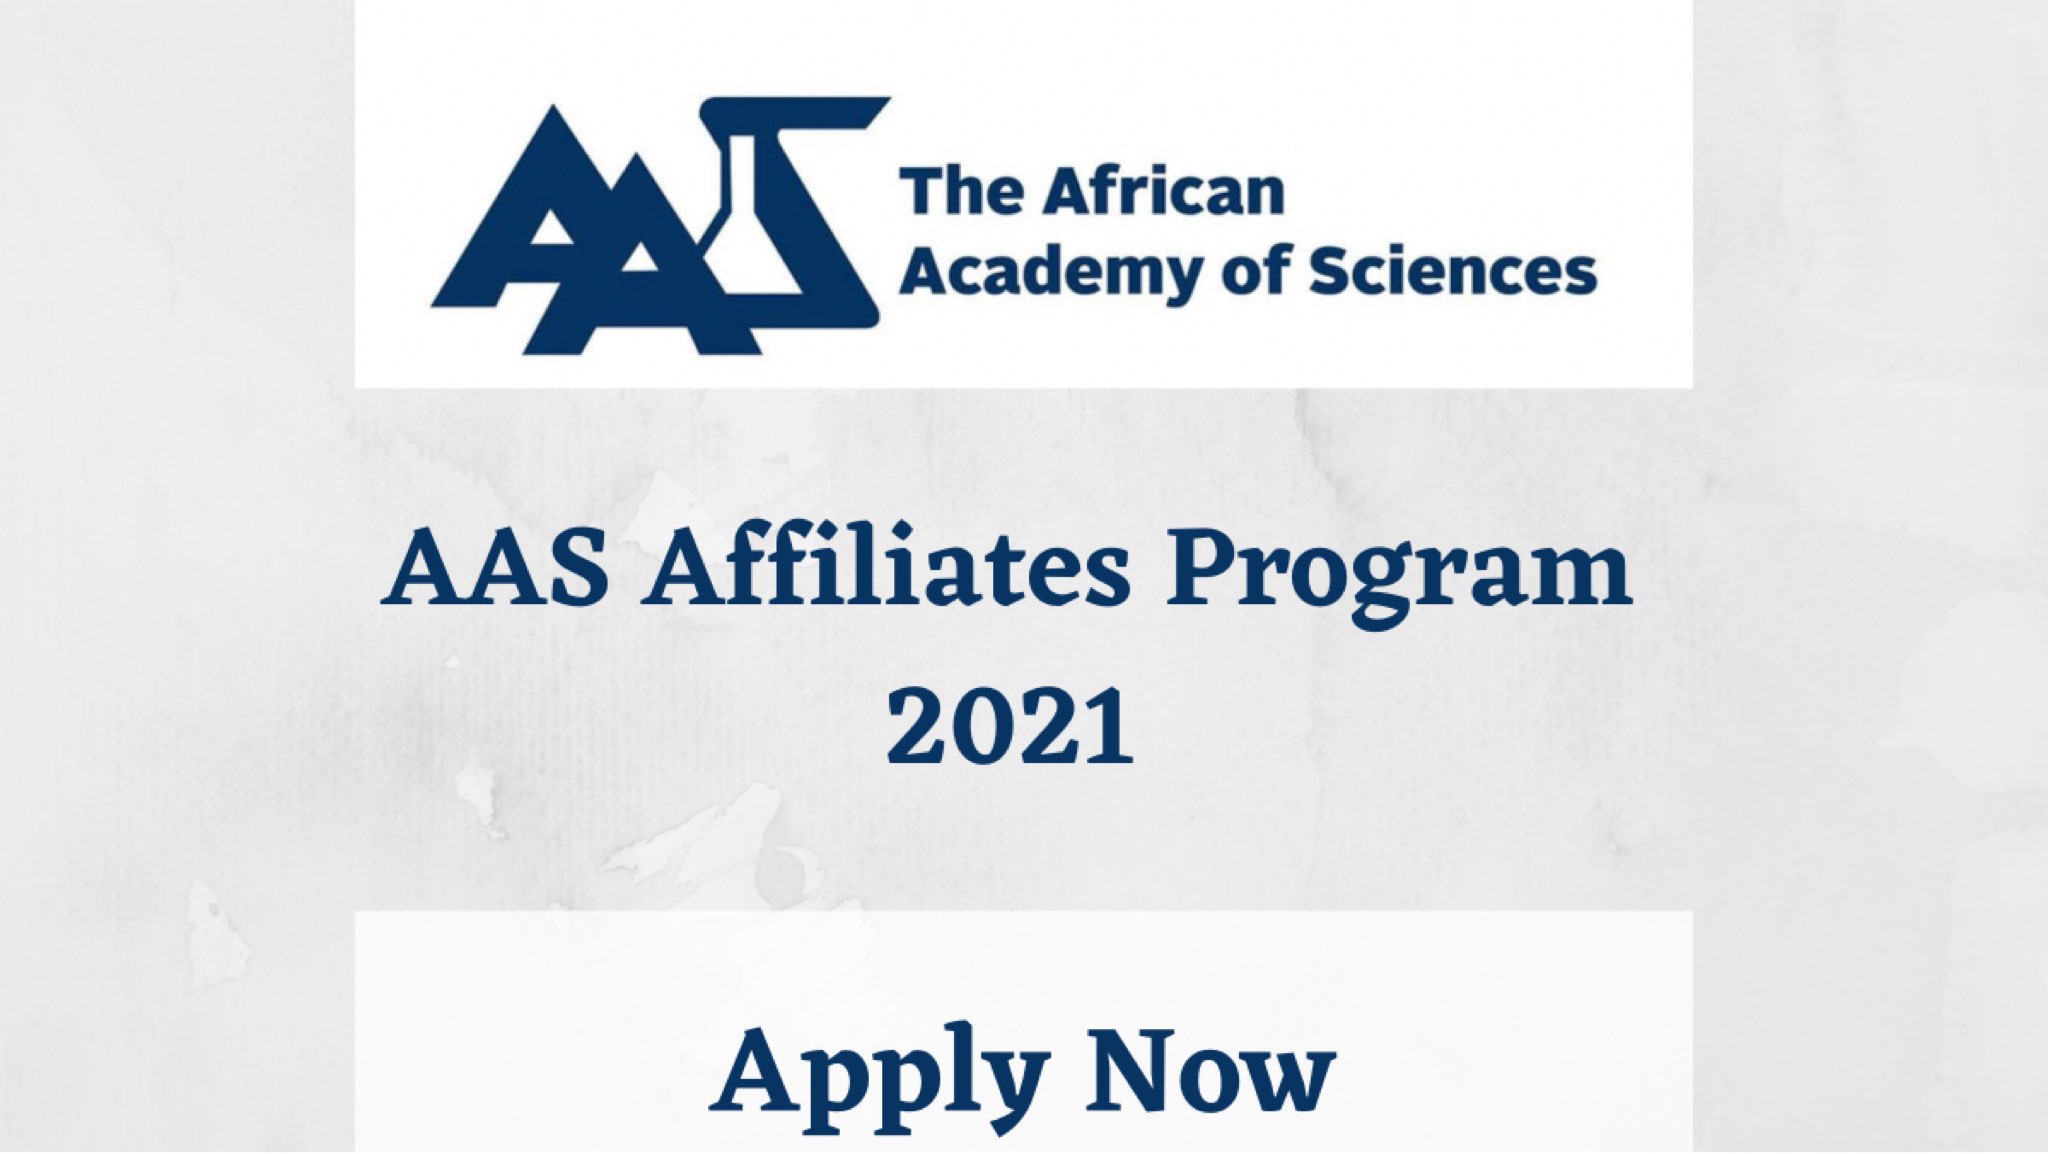 The AAS Affiliates Program